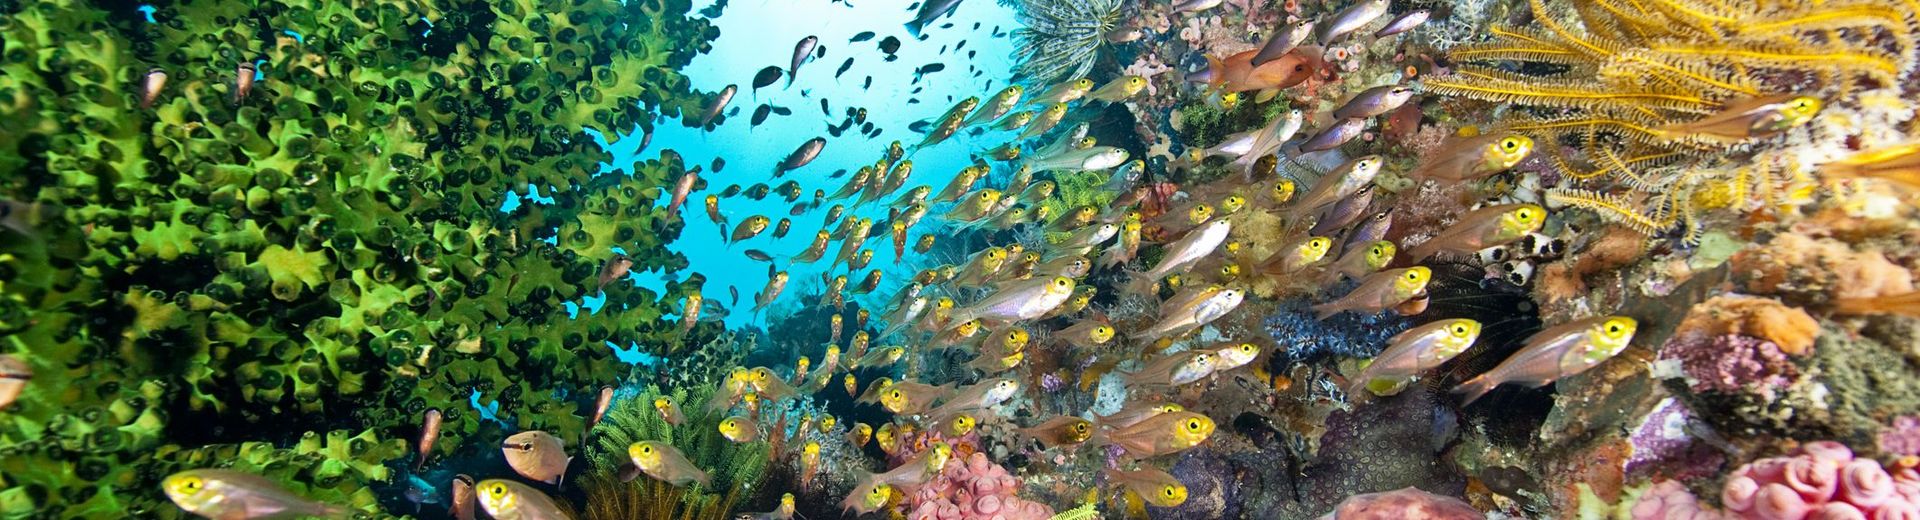 fish schooling under water near coral reefs